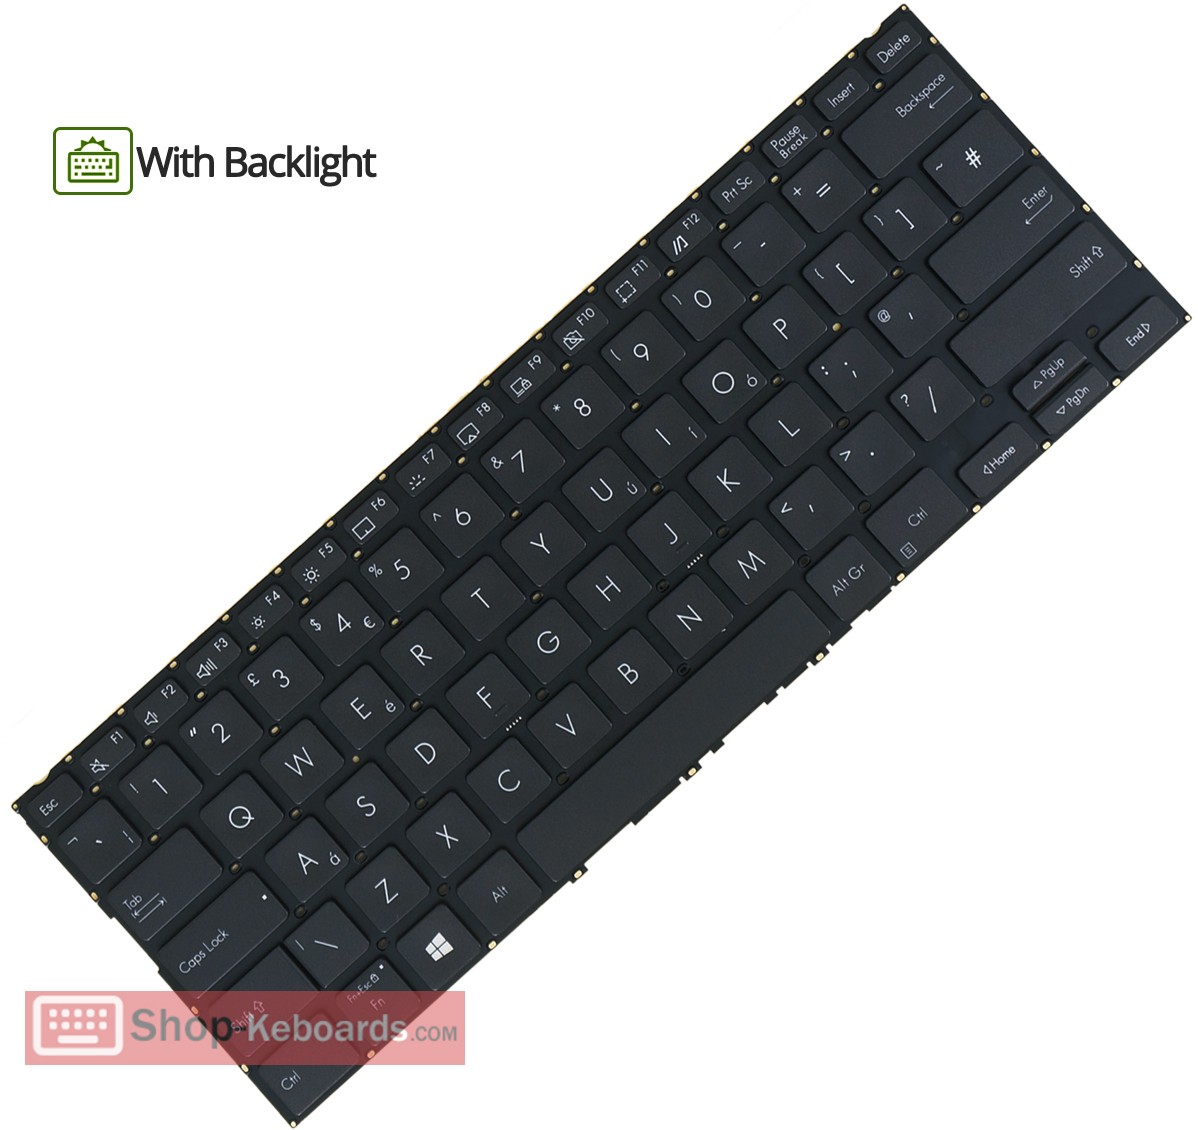 Asus 0KNB0-262VBR00  Keyboard replacement